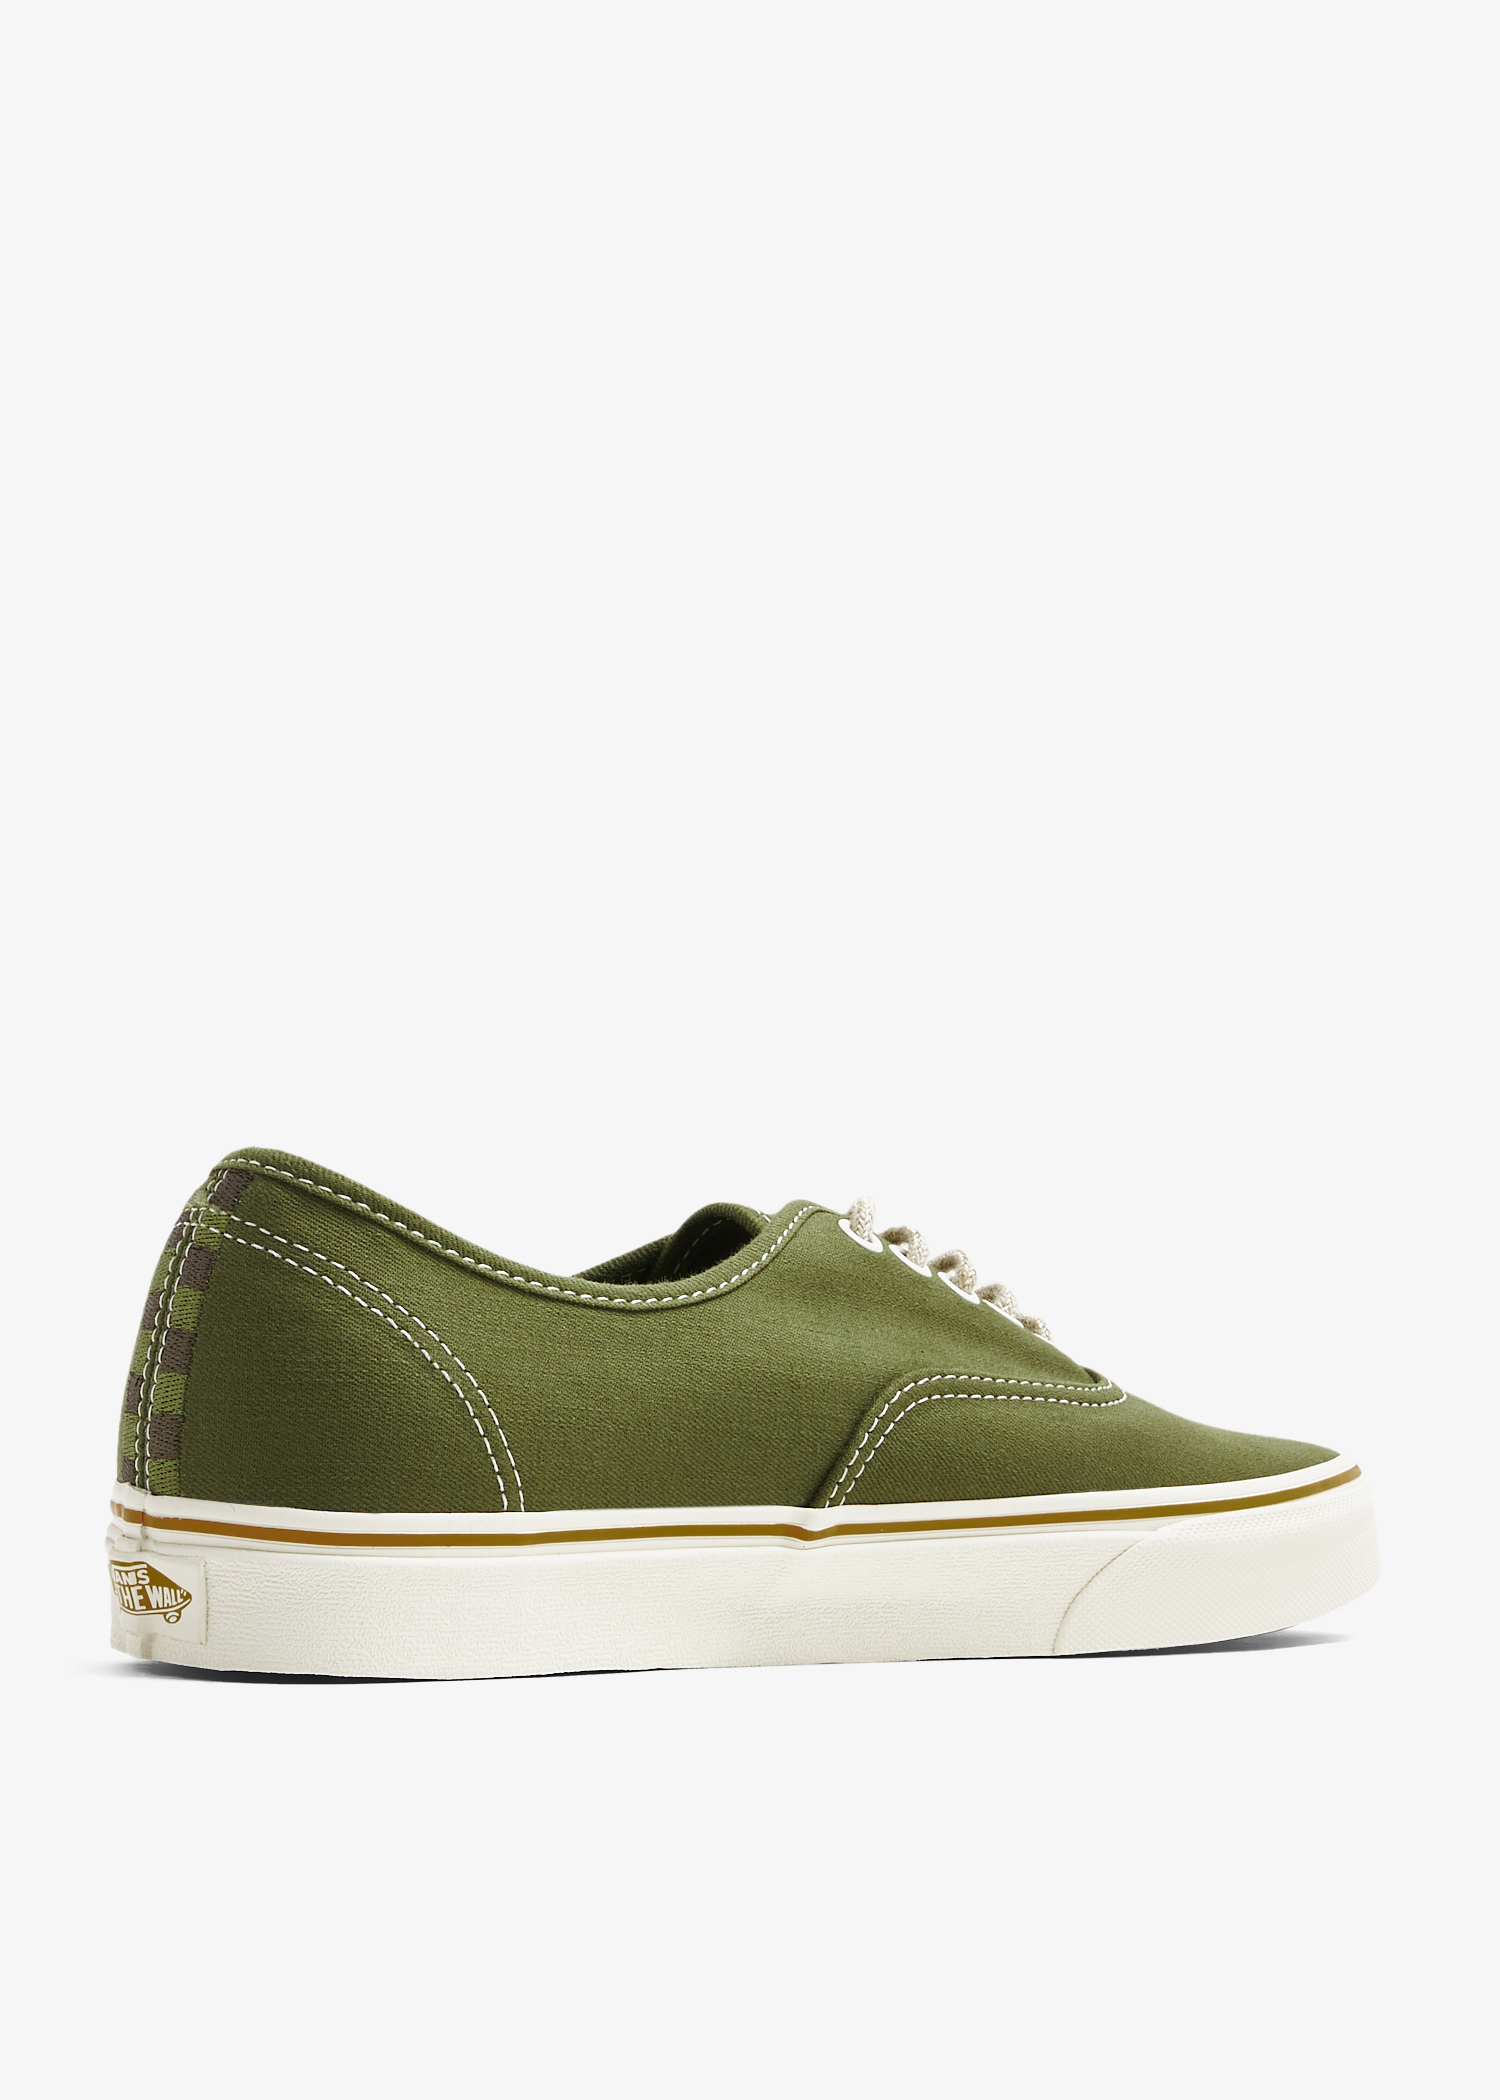 Vans Authentic sneakers for Men - Green in KSA | Level Shoes